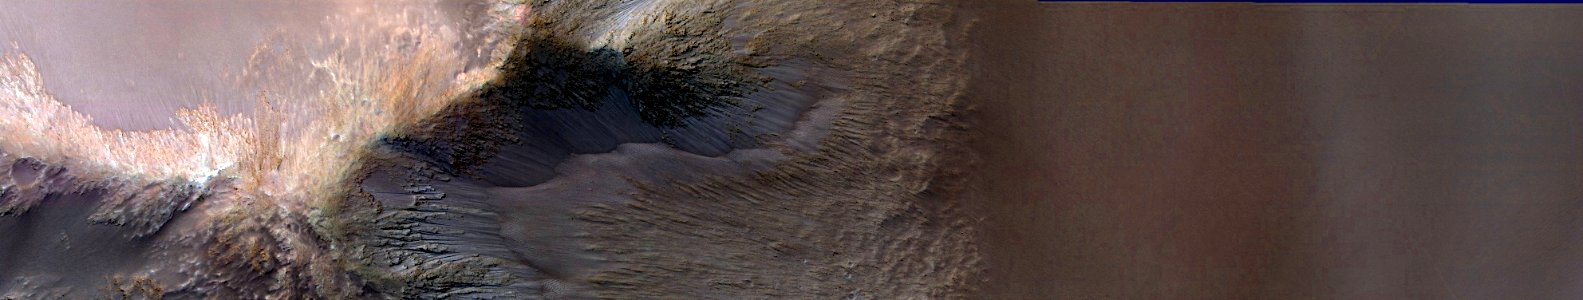 Mars - Slopes in Juventae Chasma photo